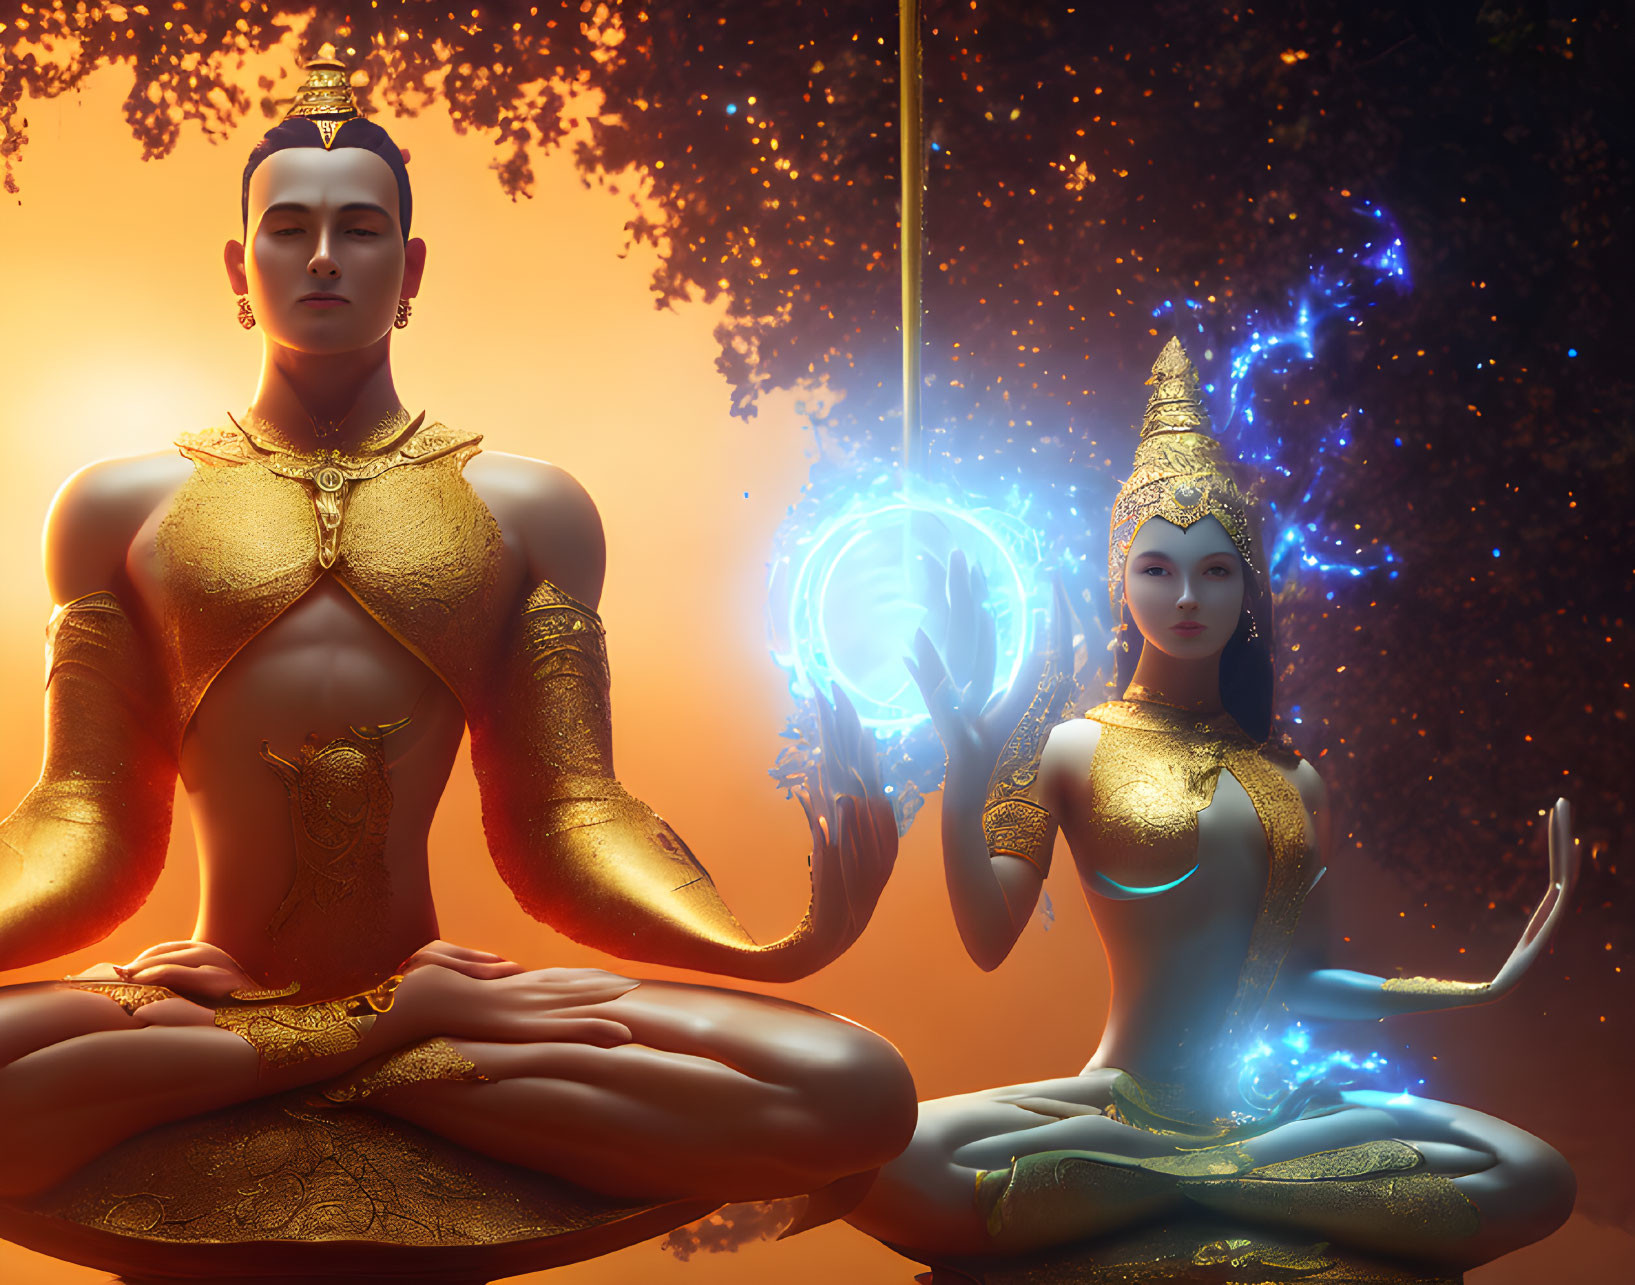 Mystical Thai-inspired figures meditating in golden attire